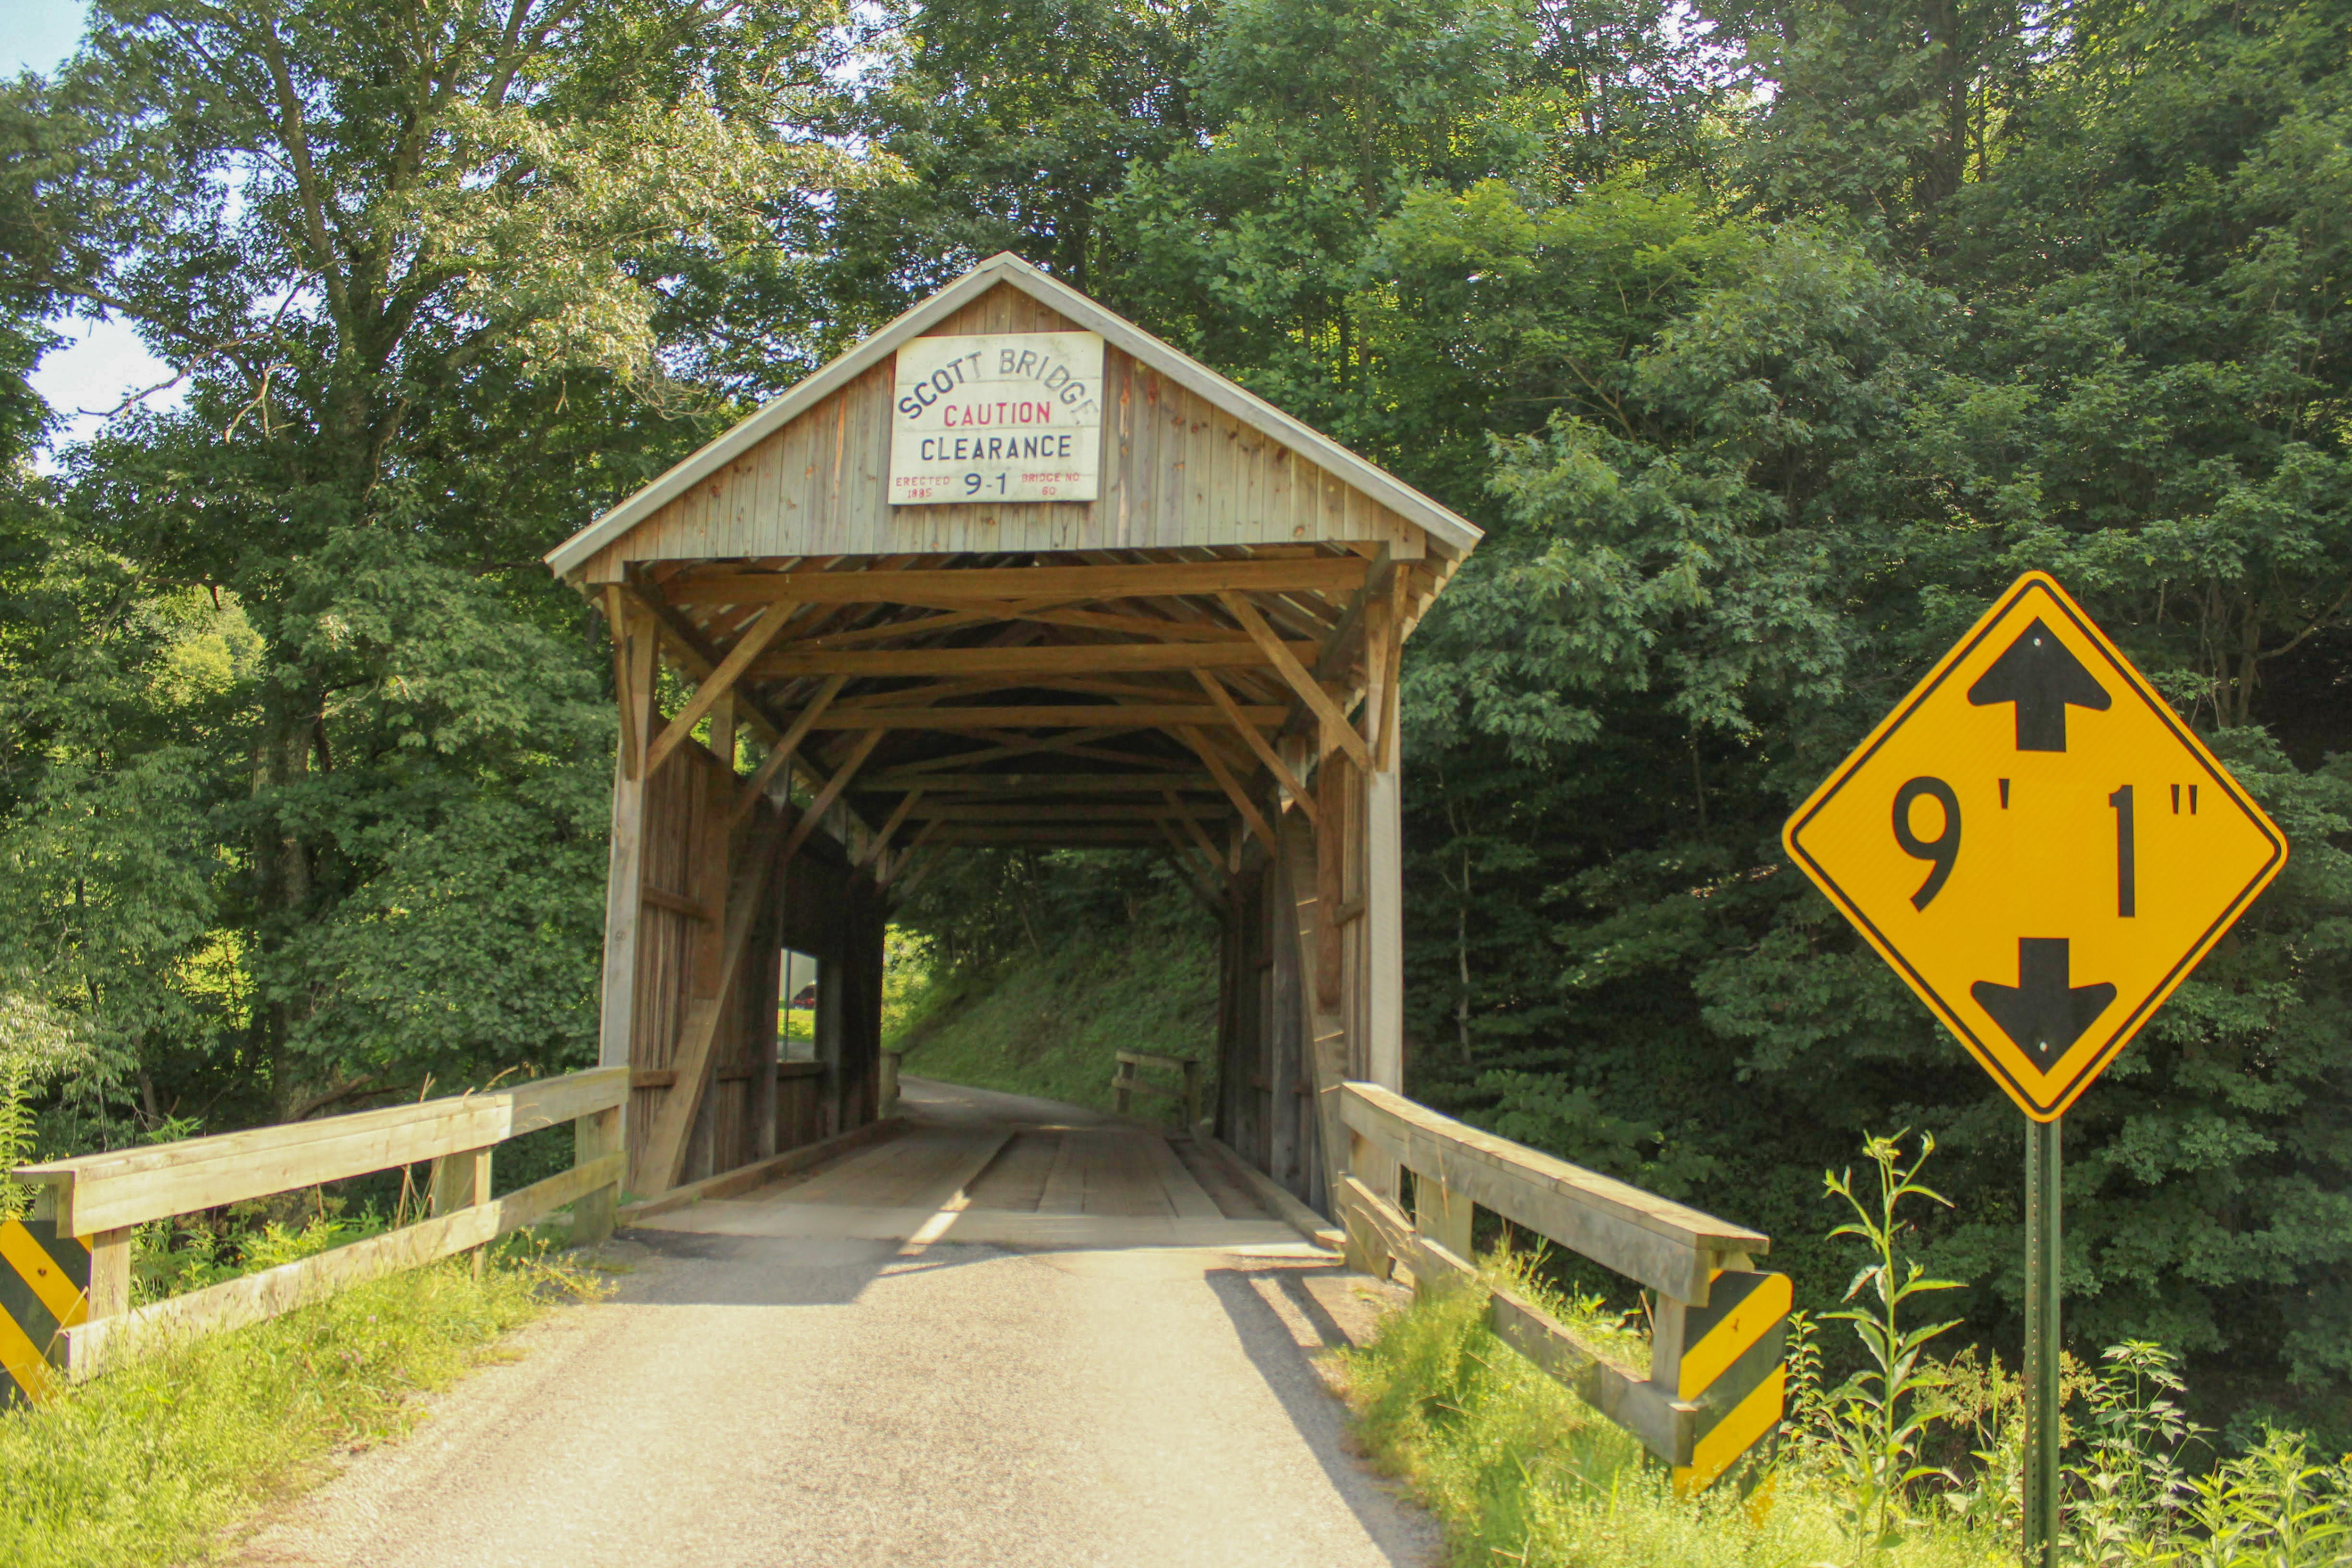 Rural Bridge